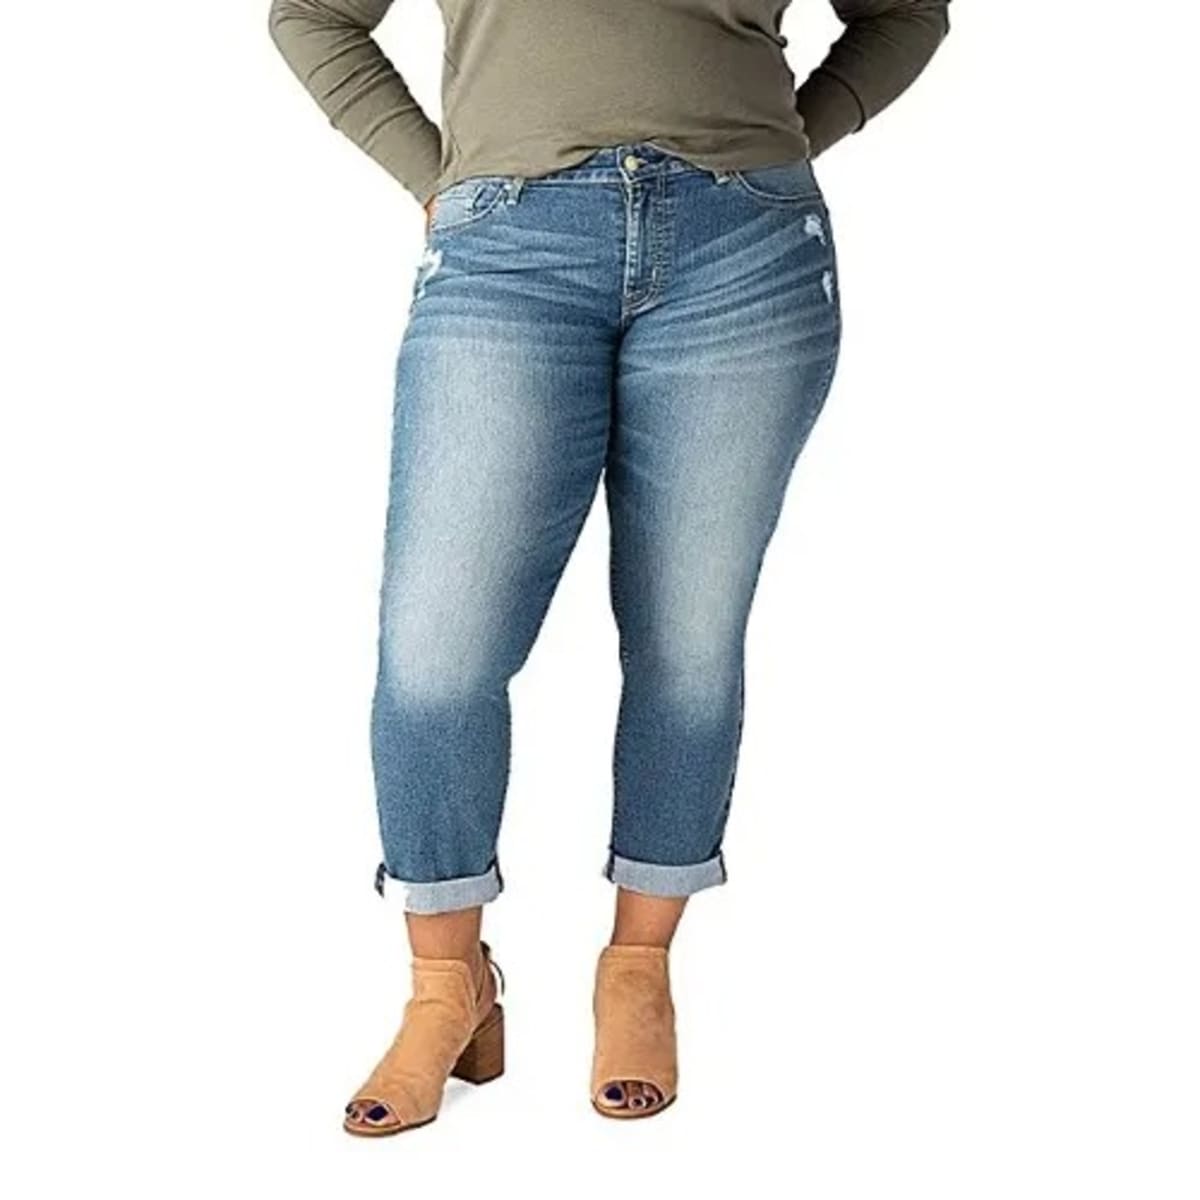 Sofia Jeans Women's Plus Size Bagi Curvy Boyfriend Mid-Rise Jean